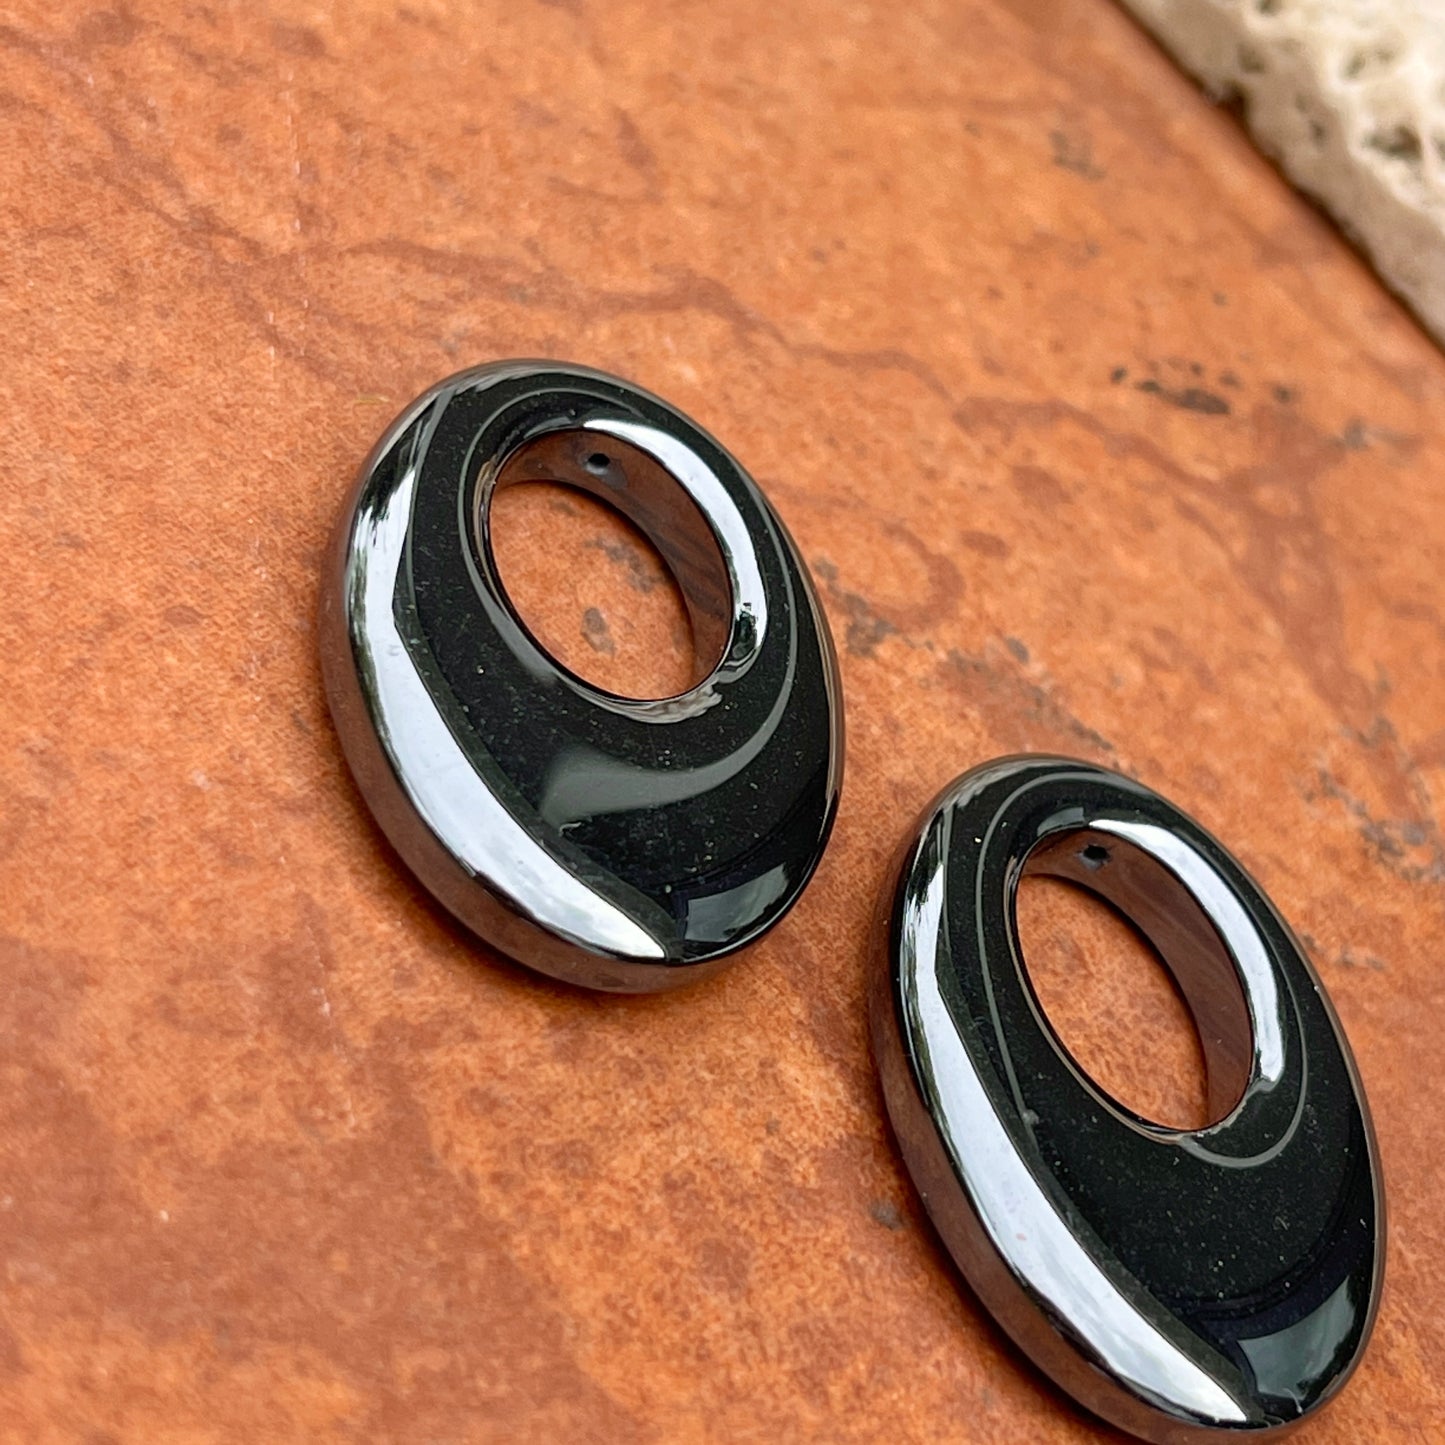 Genuine Hematite Oval Disc Gemstone Earring Charms